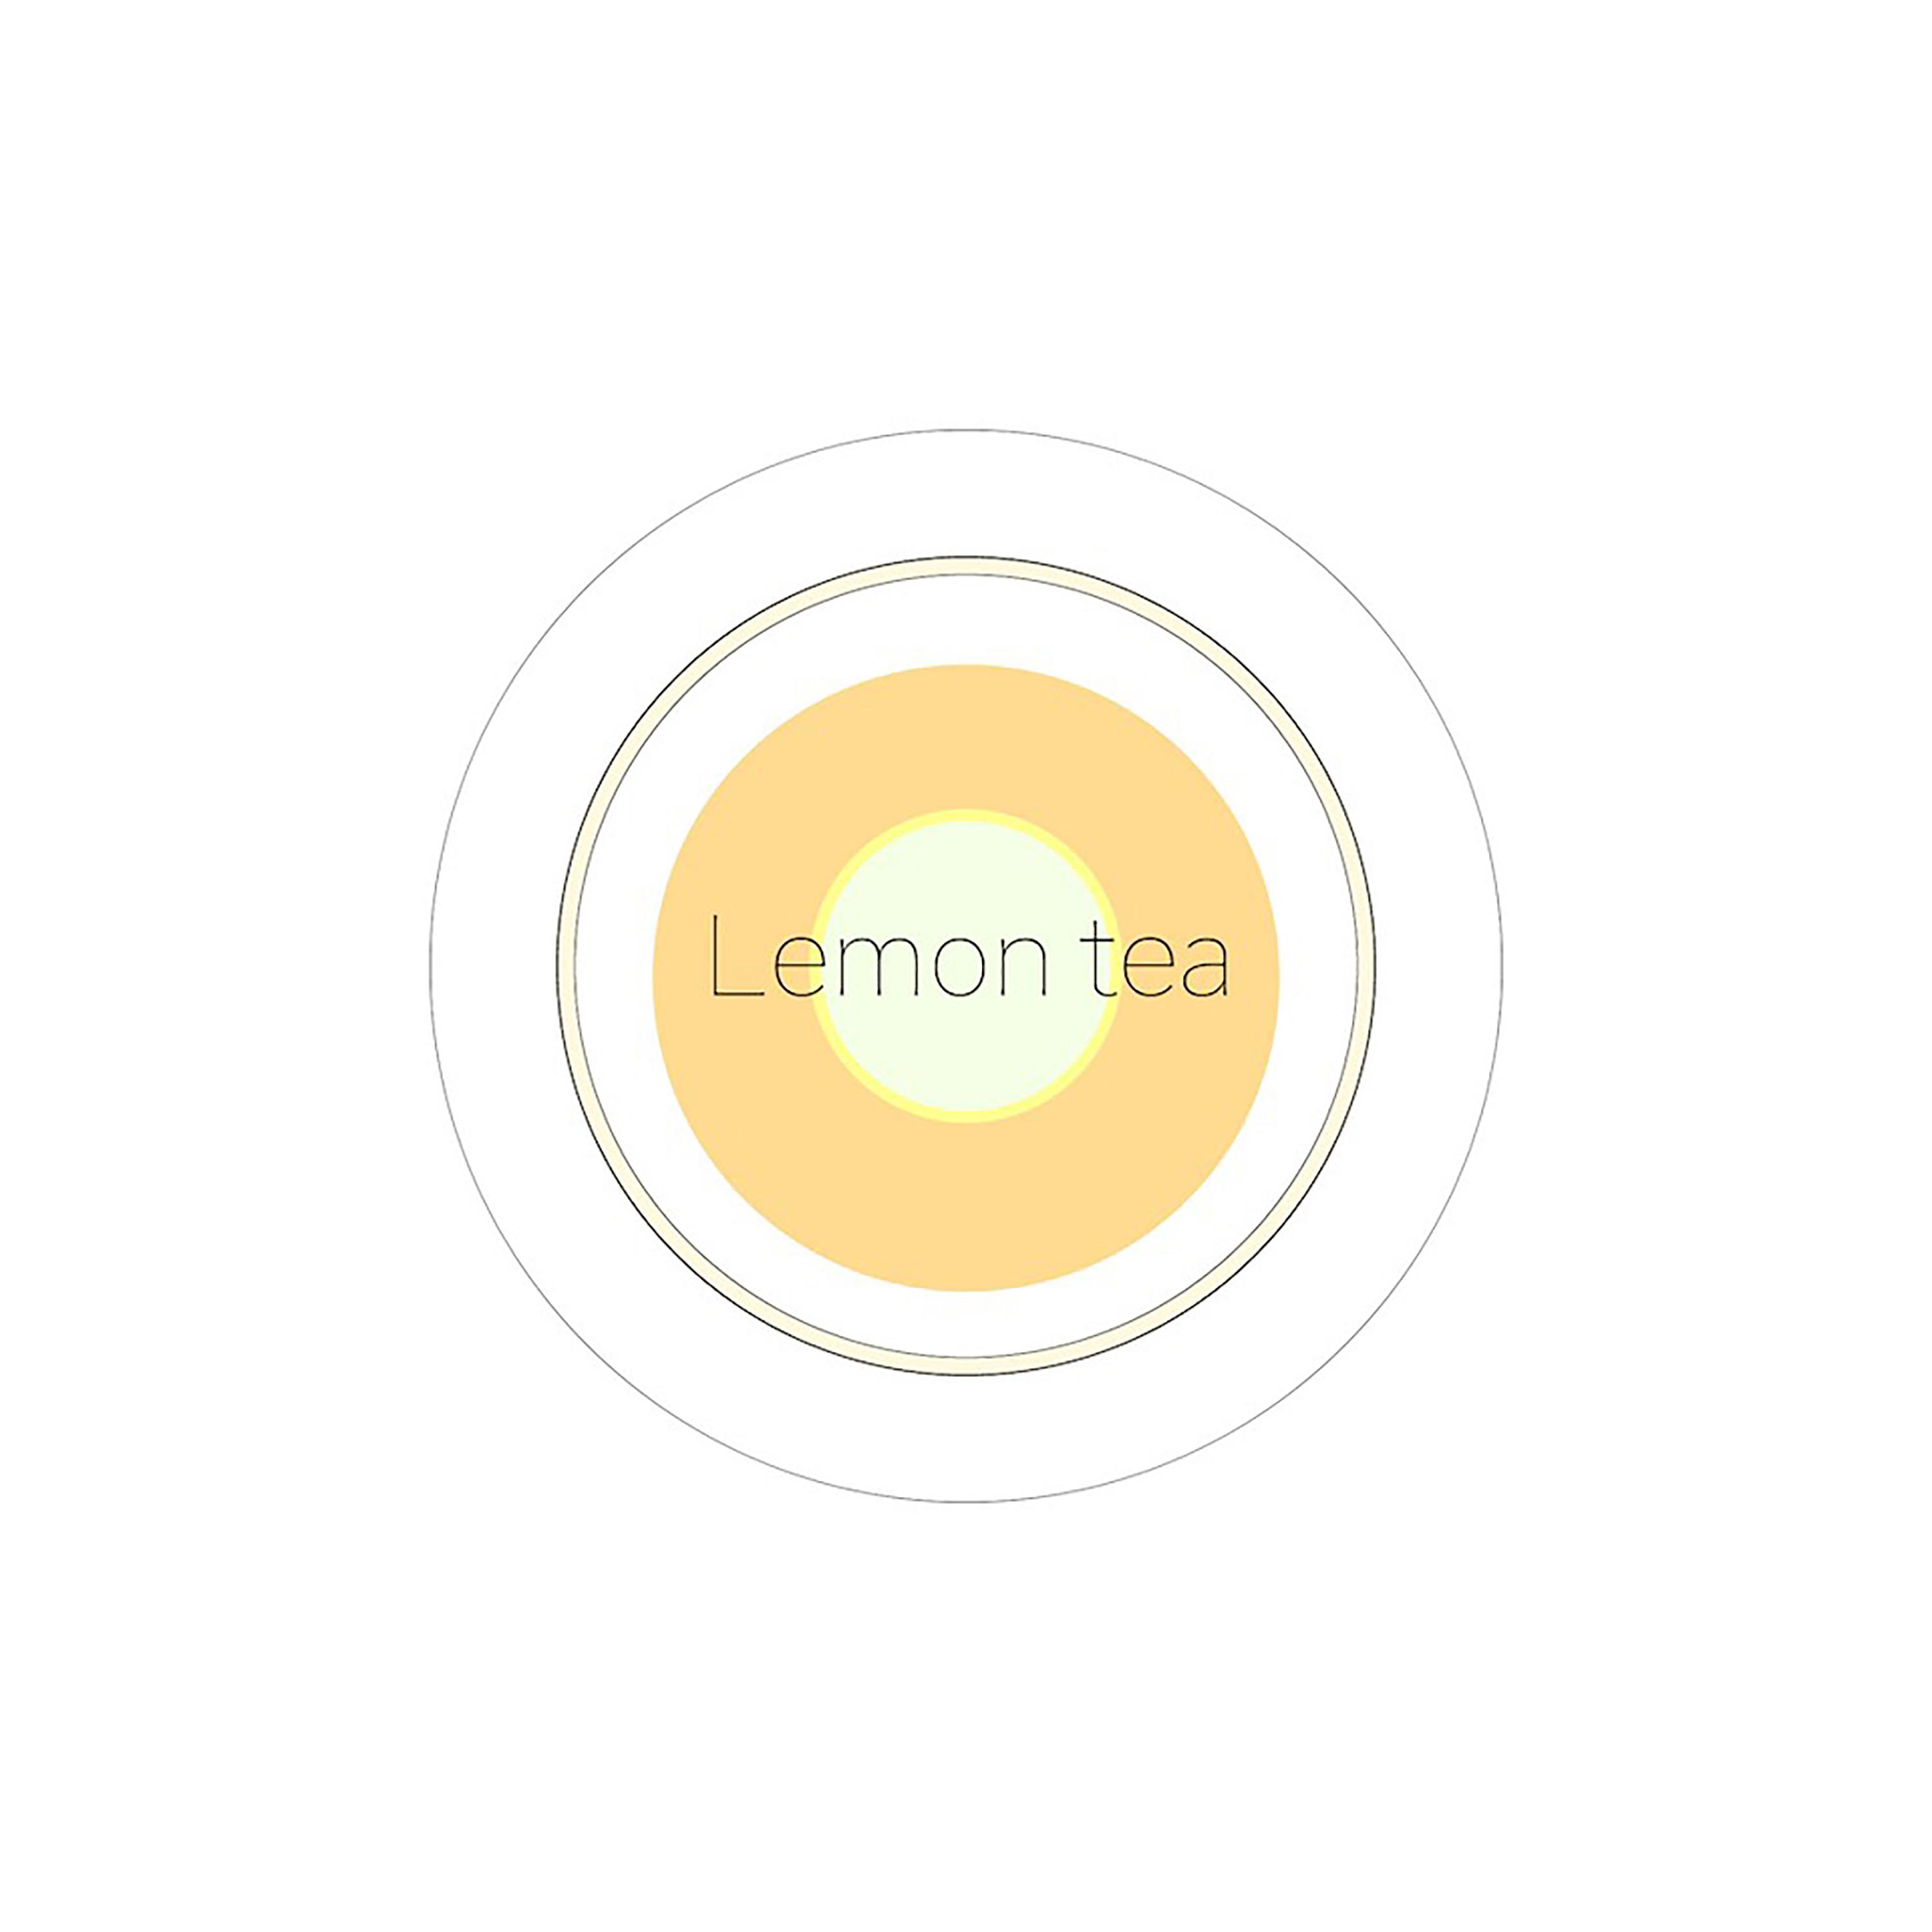 Lemon tea歌词 歌手asmi-专辑Lemon tea-单曲《Lemon tea》LRC歌词下载